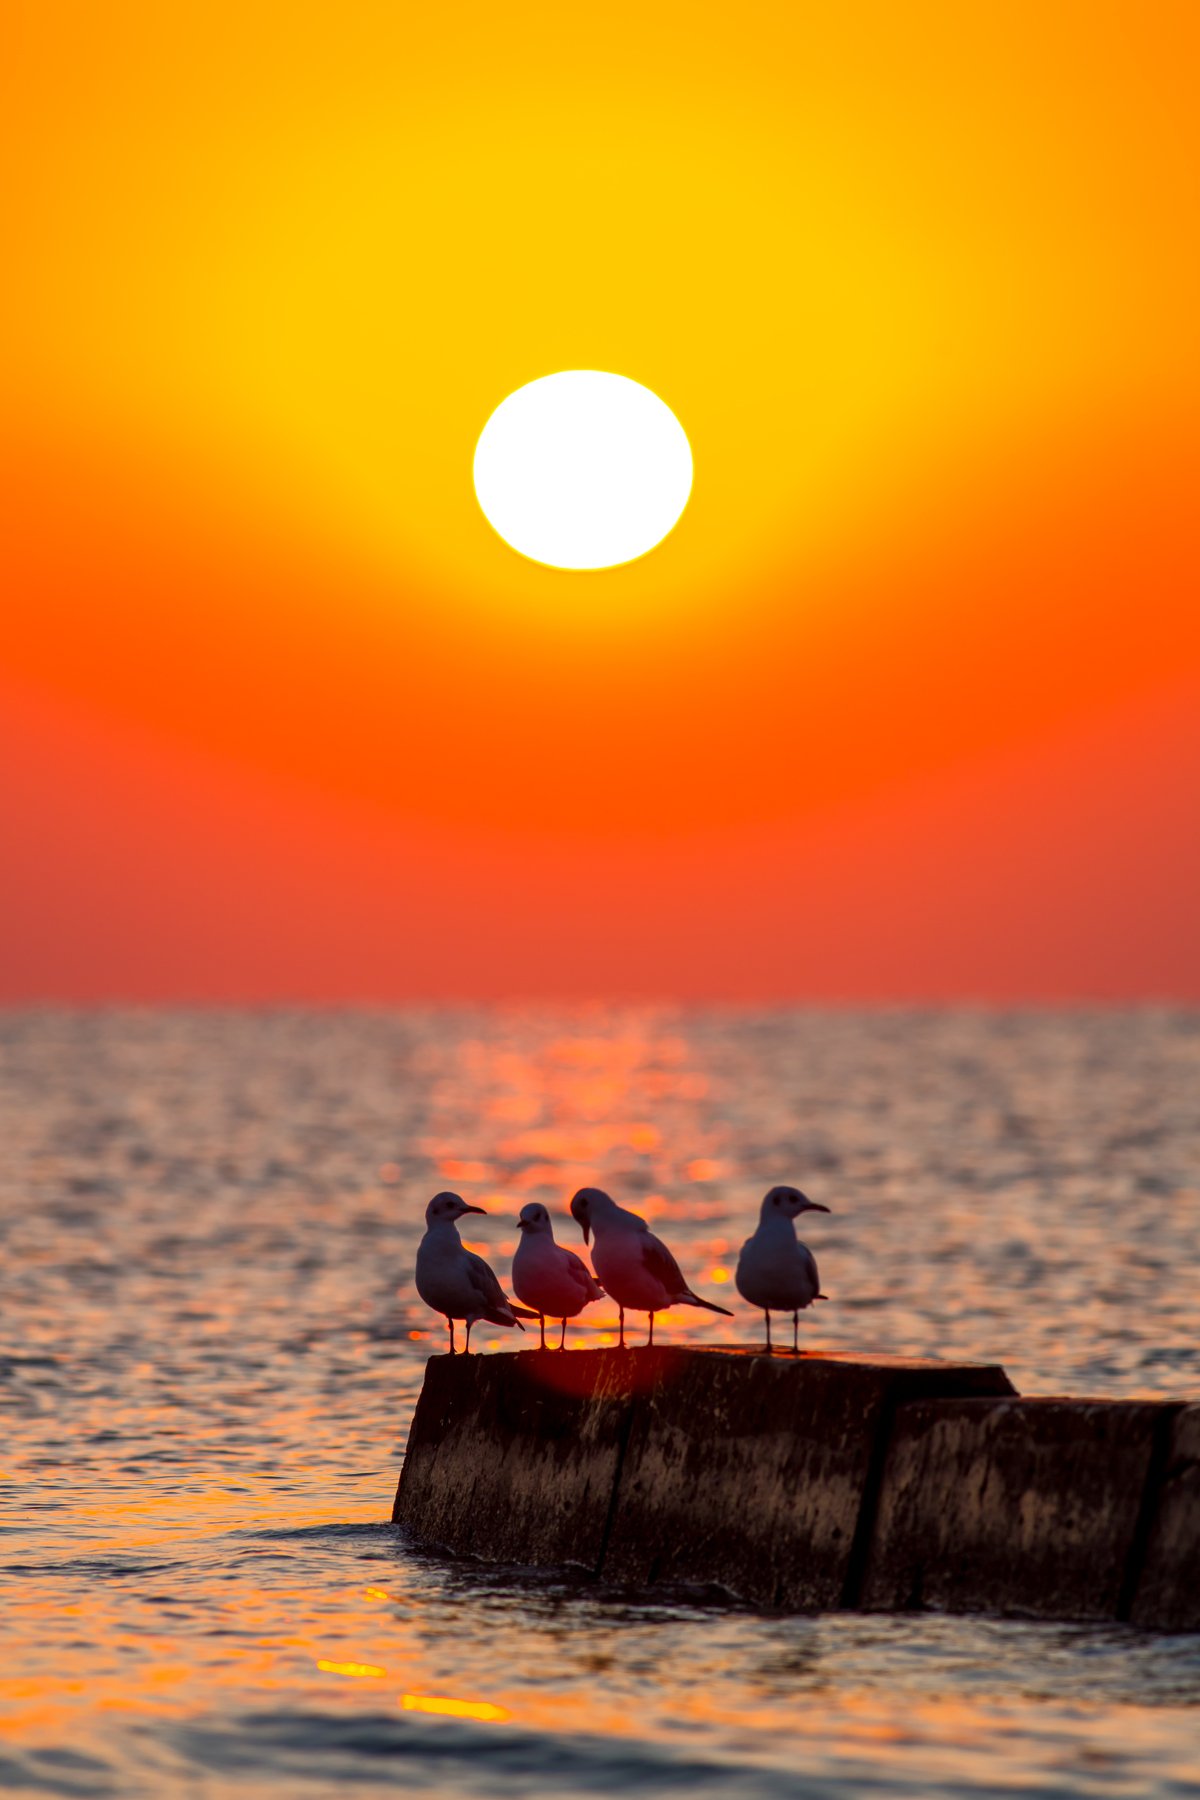 Кипр, Восход солнца, чайки, ярко-оранжевое, оранжевый, солнце, море, Vyacheslav Lozhkin